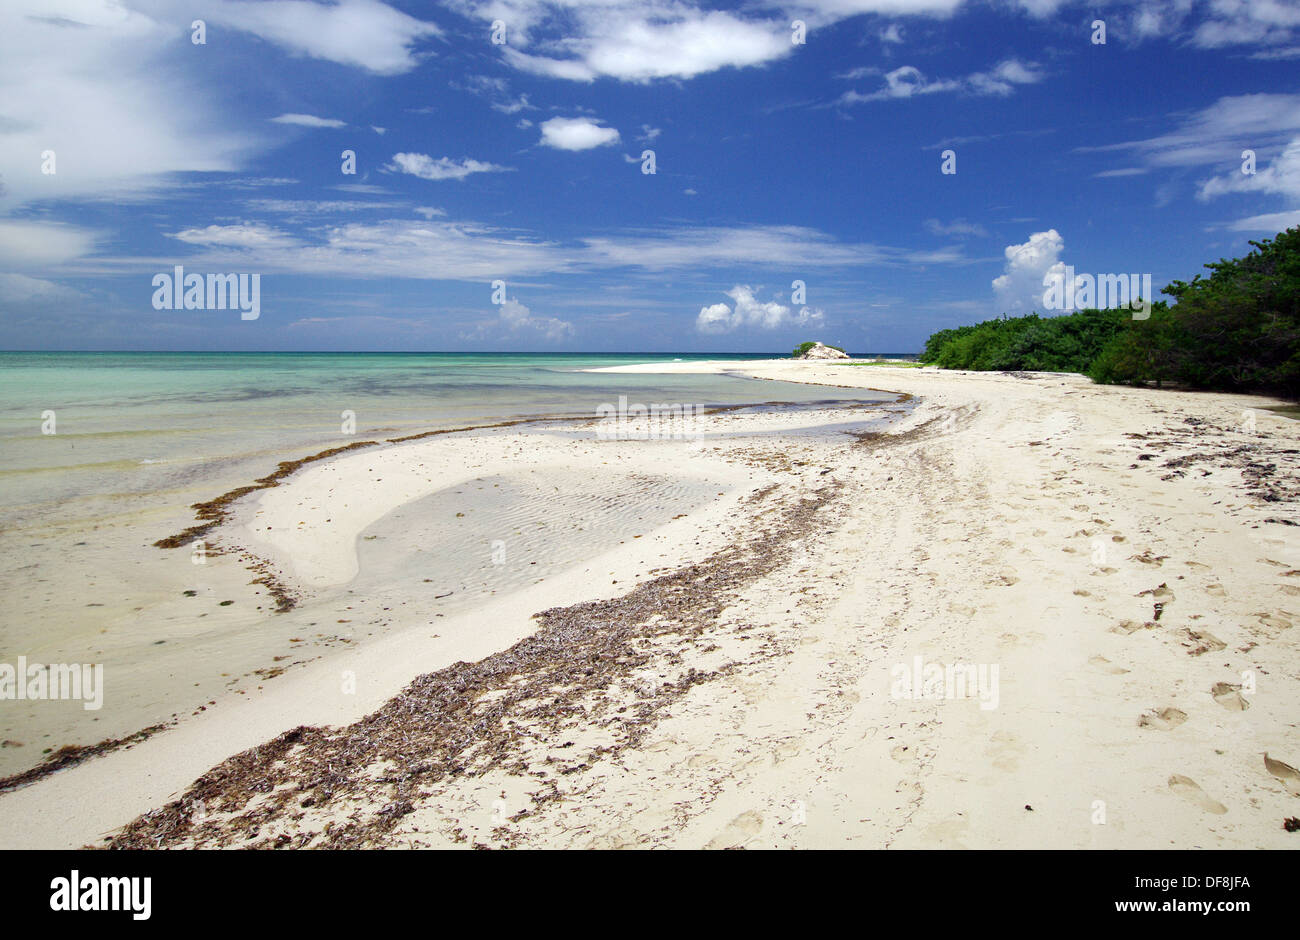 Deserted beach in Cayo Coco, Cuba Stock Photo